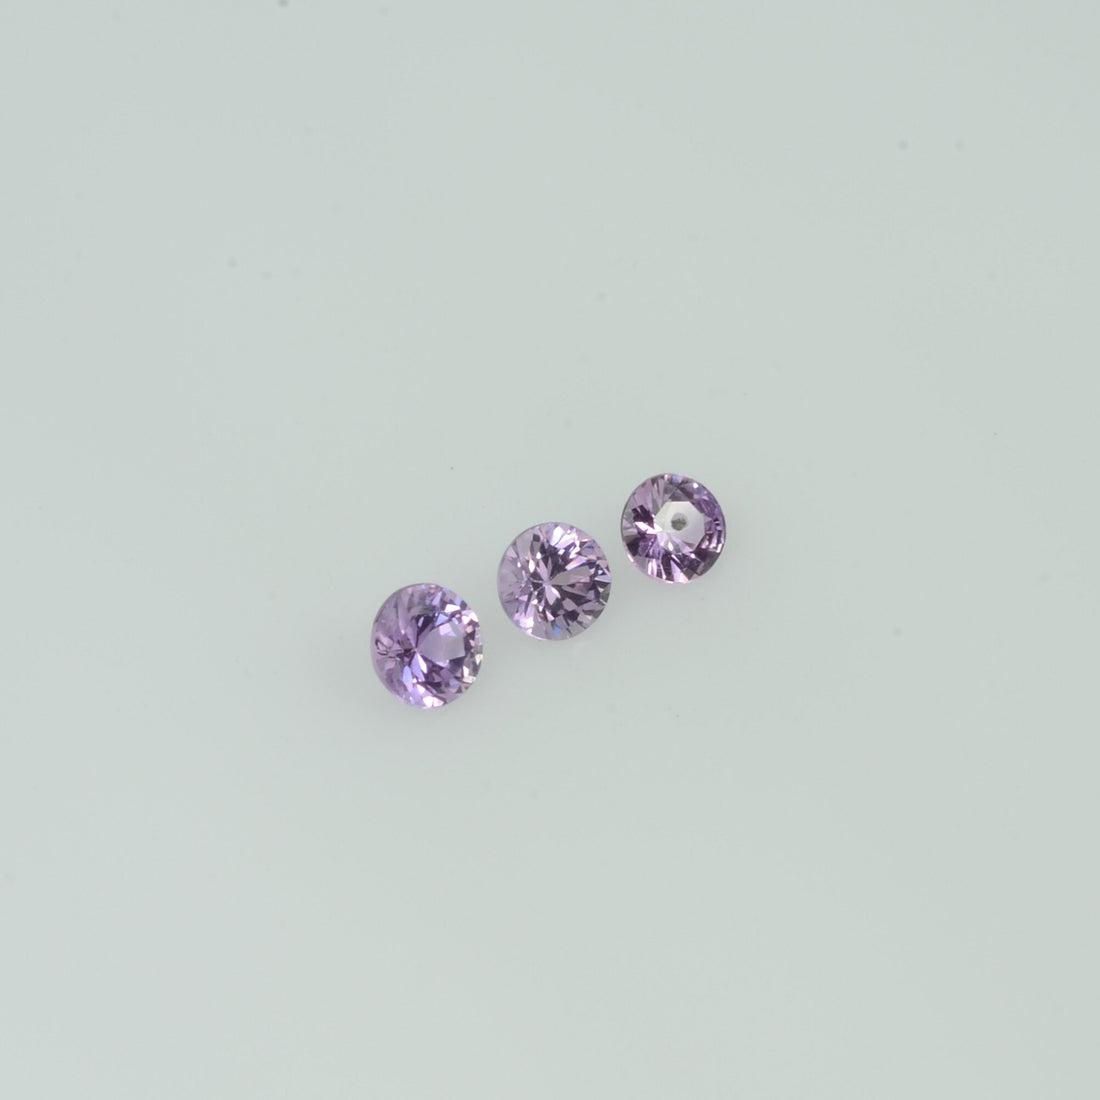 2-3.0 mm Natural Lavender Purple Sapphire Loose Gemstone Cleanish Quality Round Diamond Cut